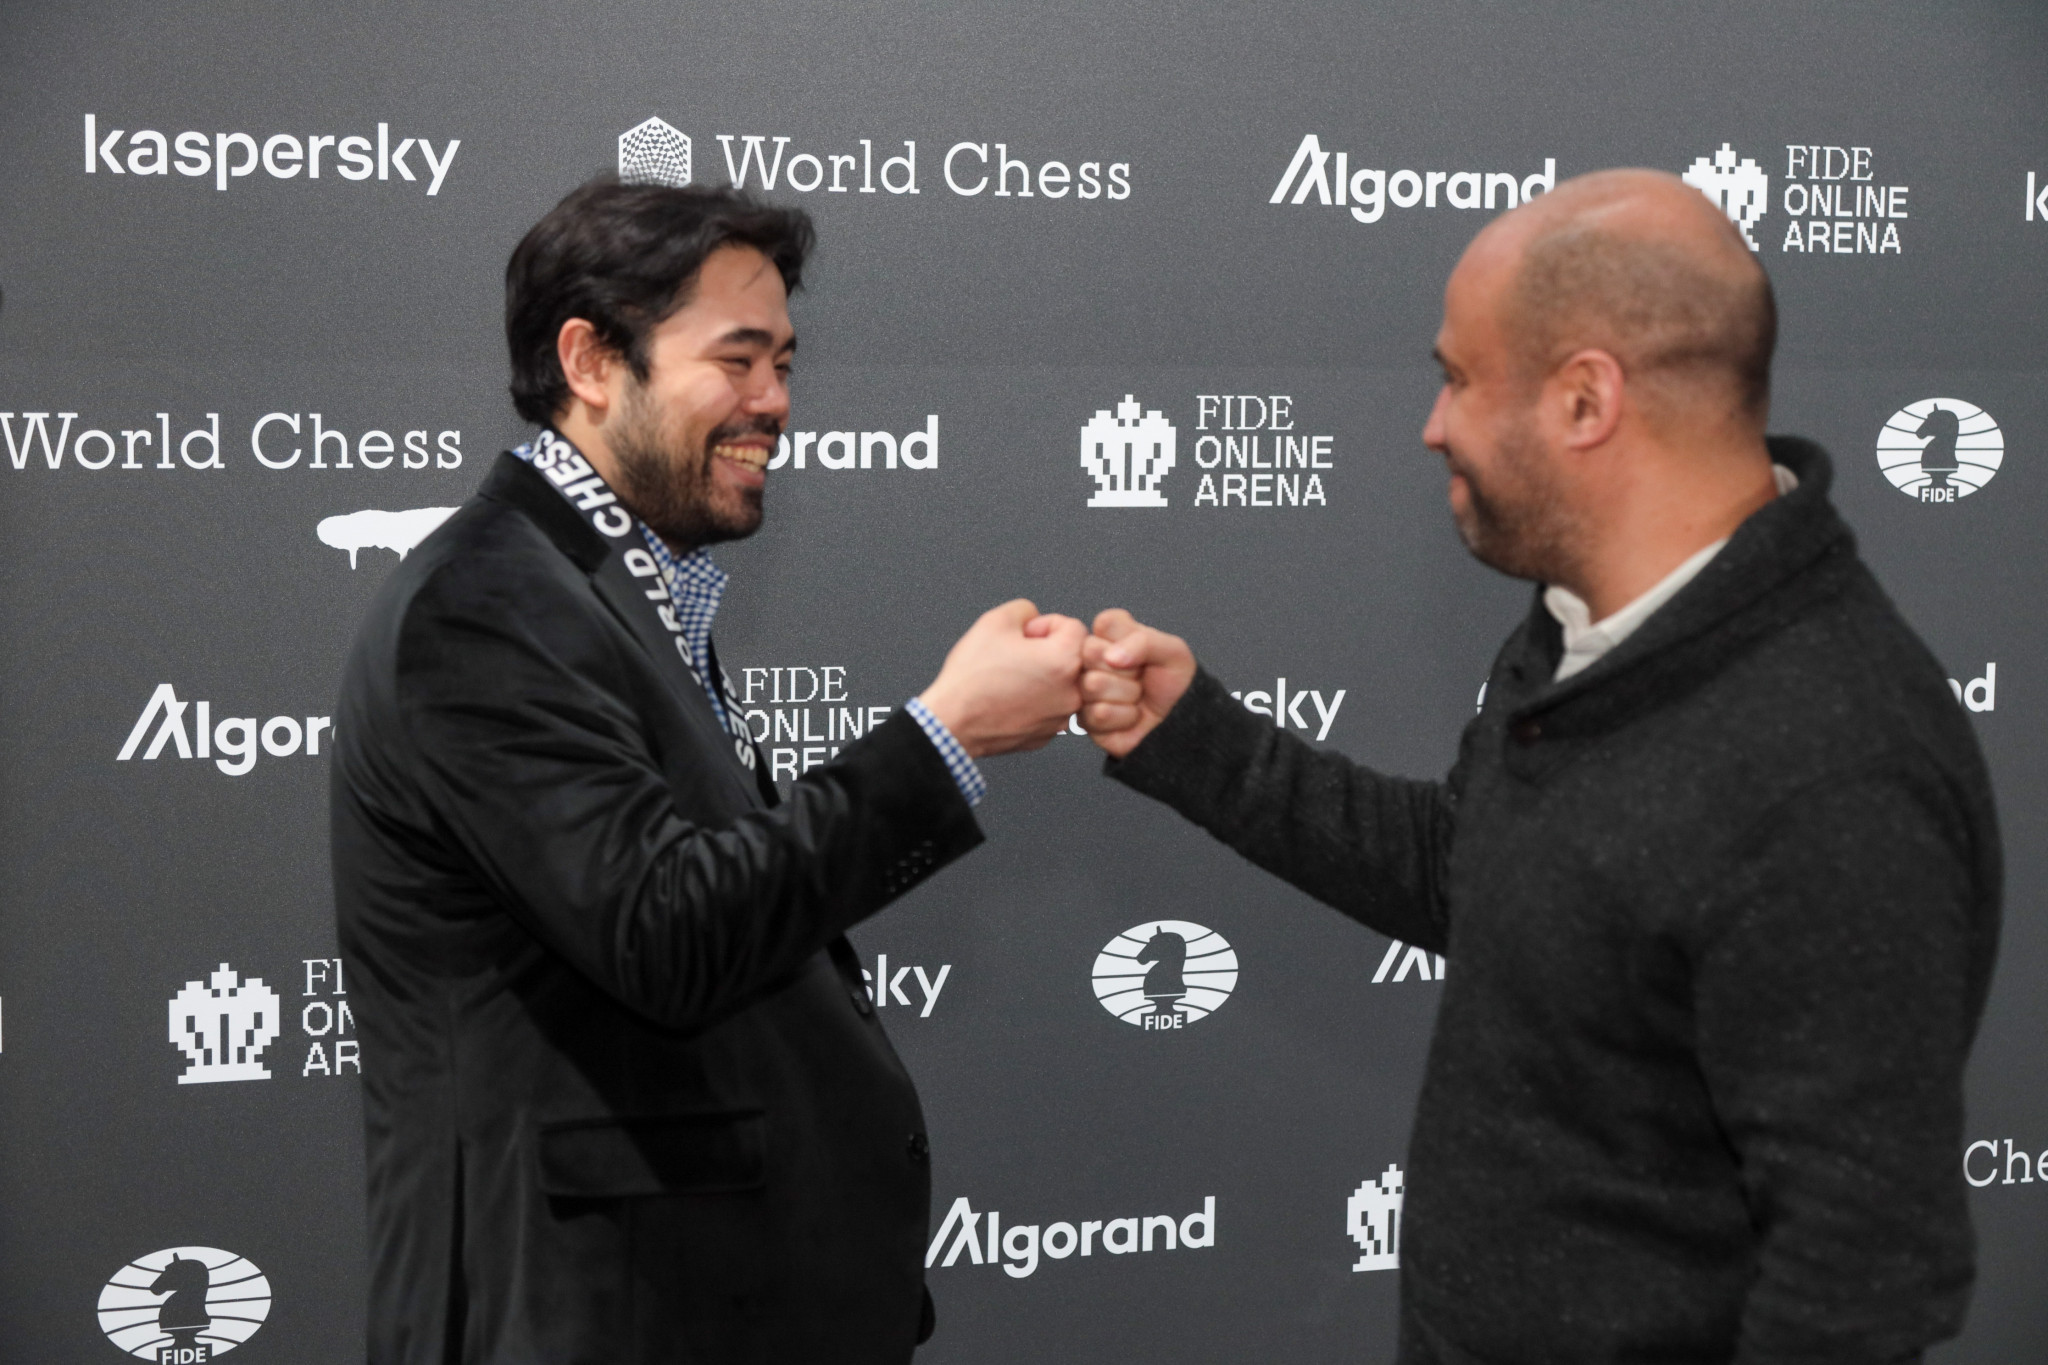 FIDE Chess World Rapid & Blitz 2021 Hikaru Nakamura (USA) during